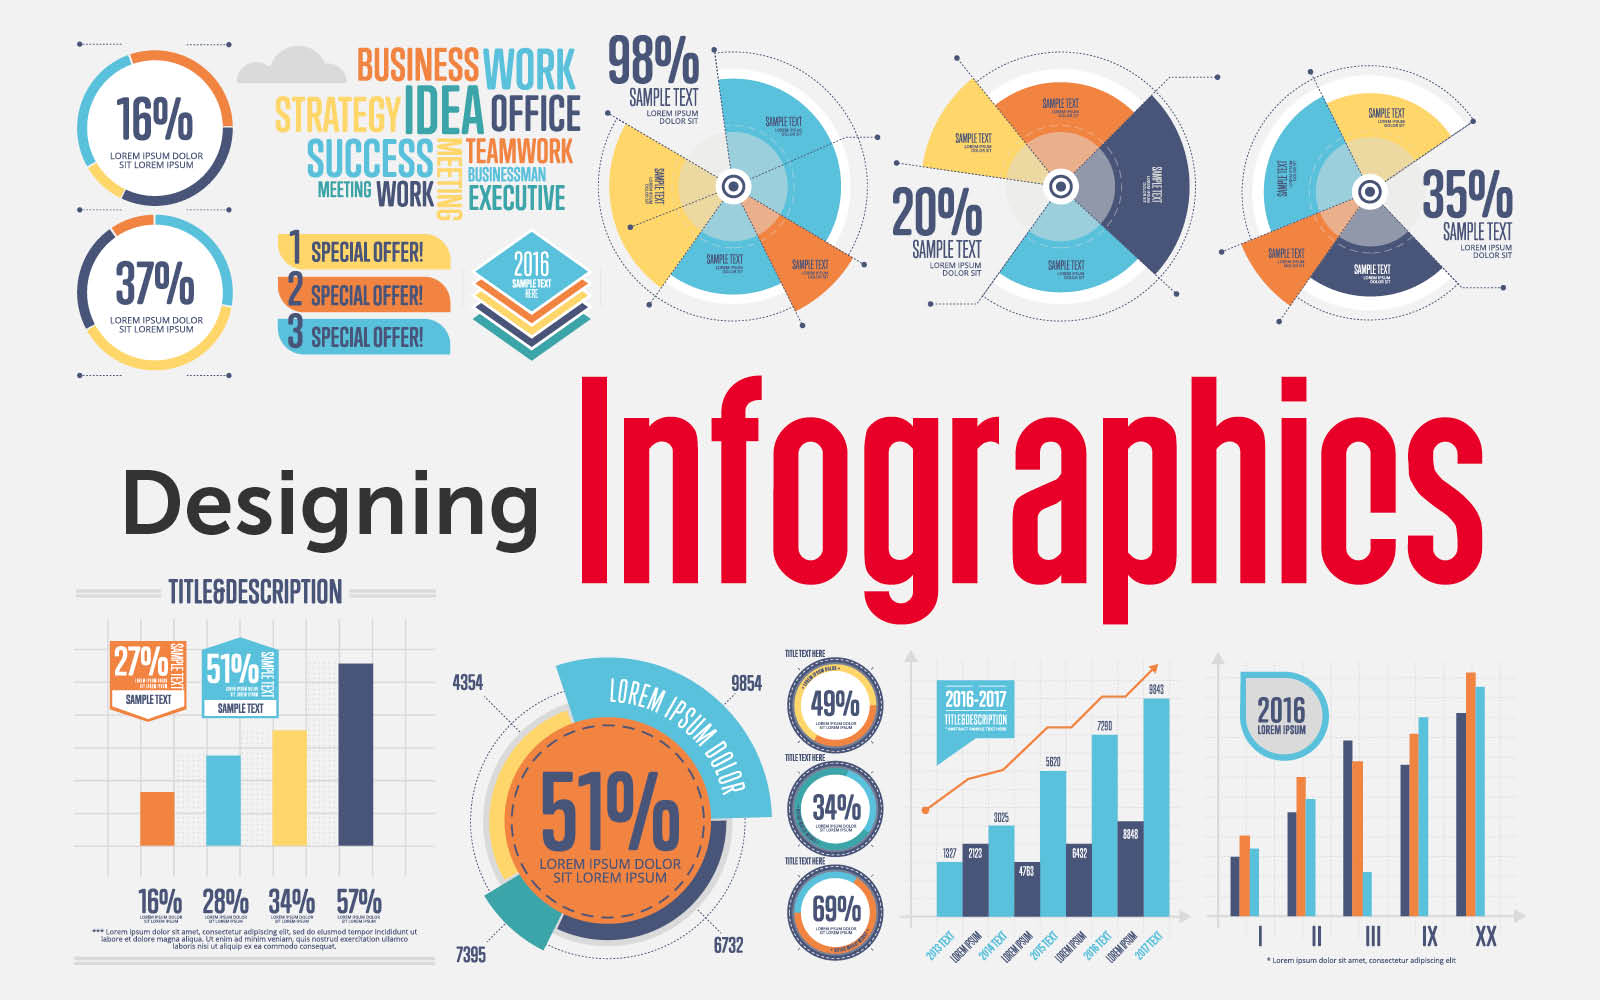 Ten tips for designing infographics